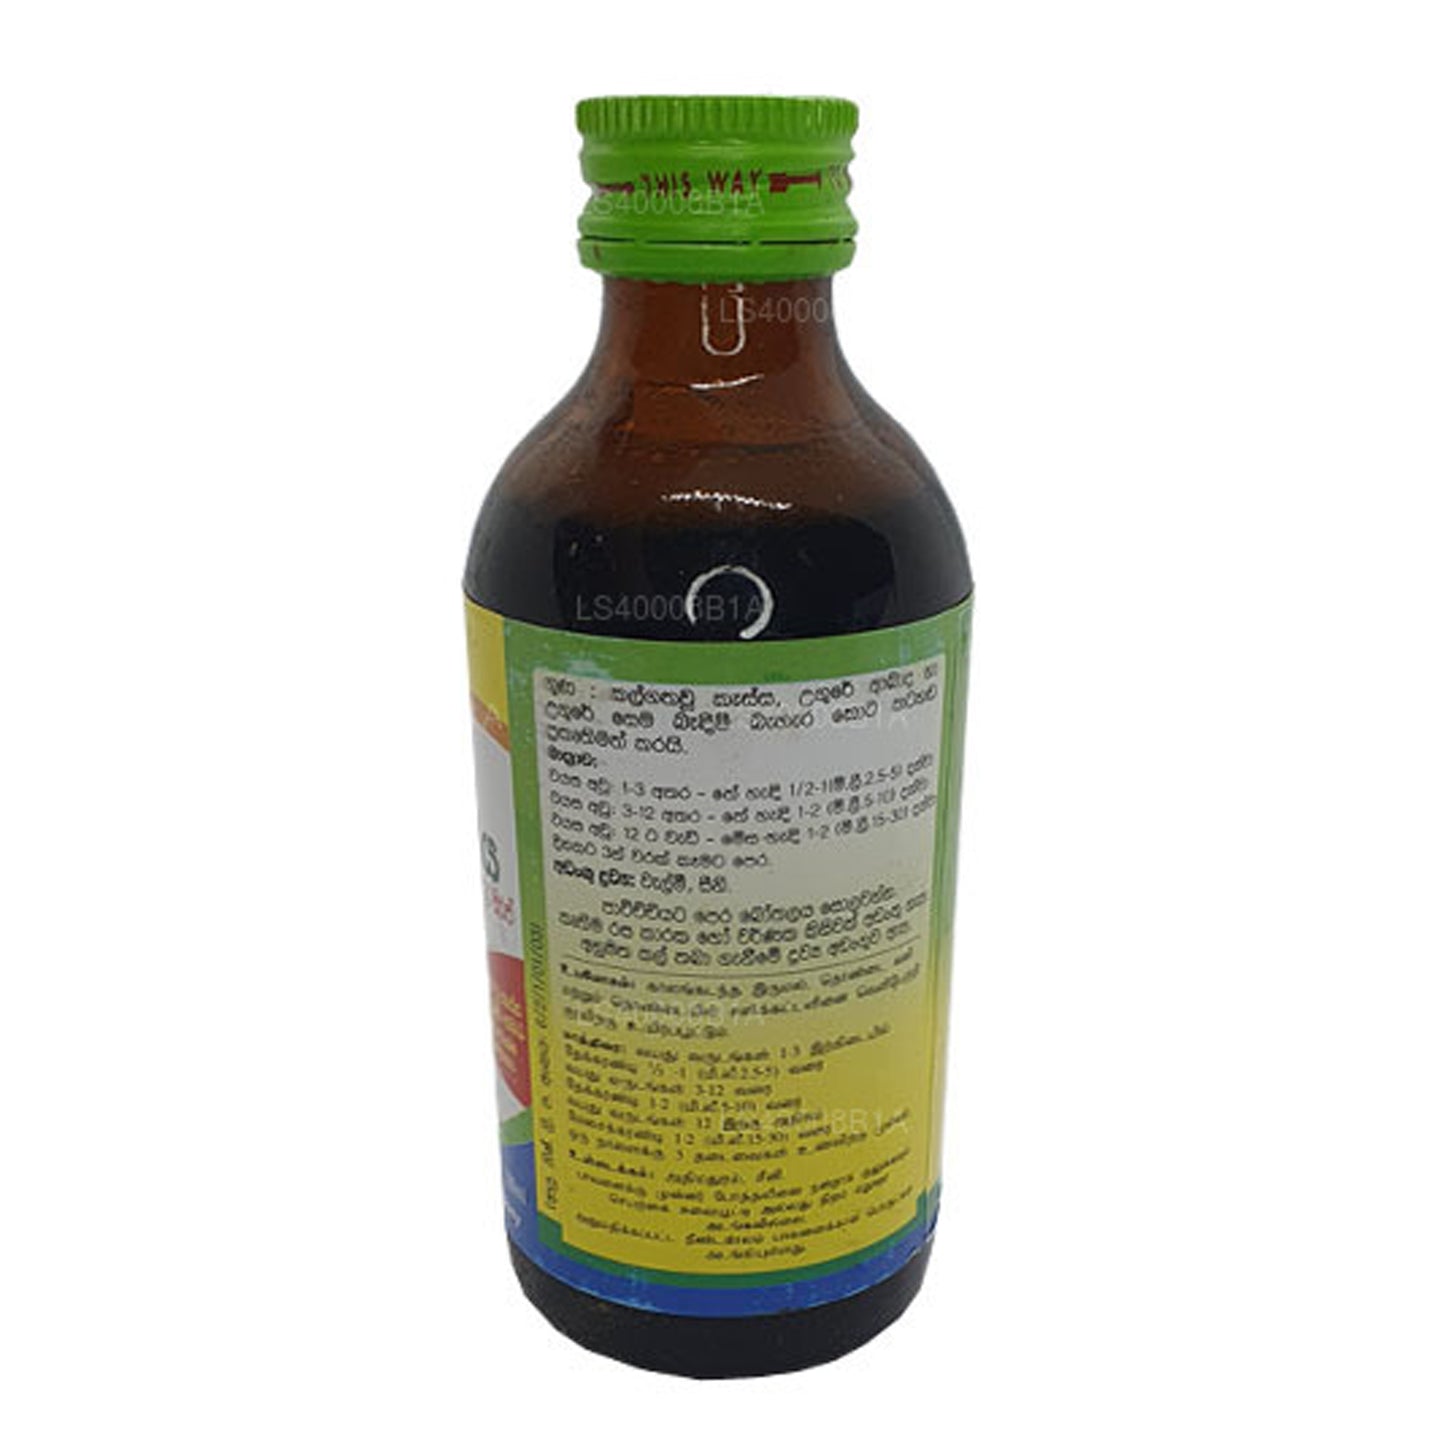 Beam Velmee Syrup (Athimadura Syrup) (180ml)